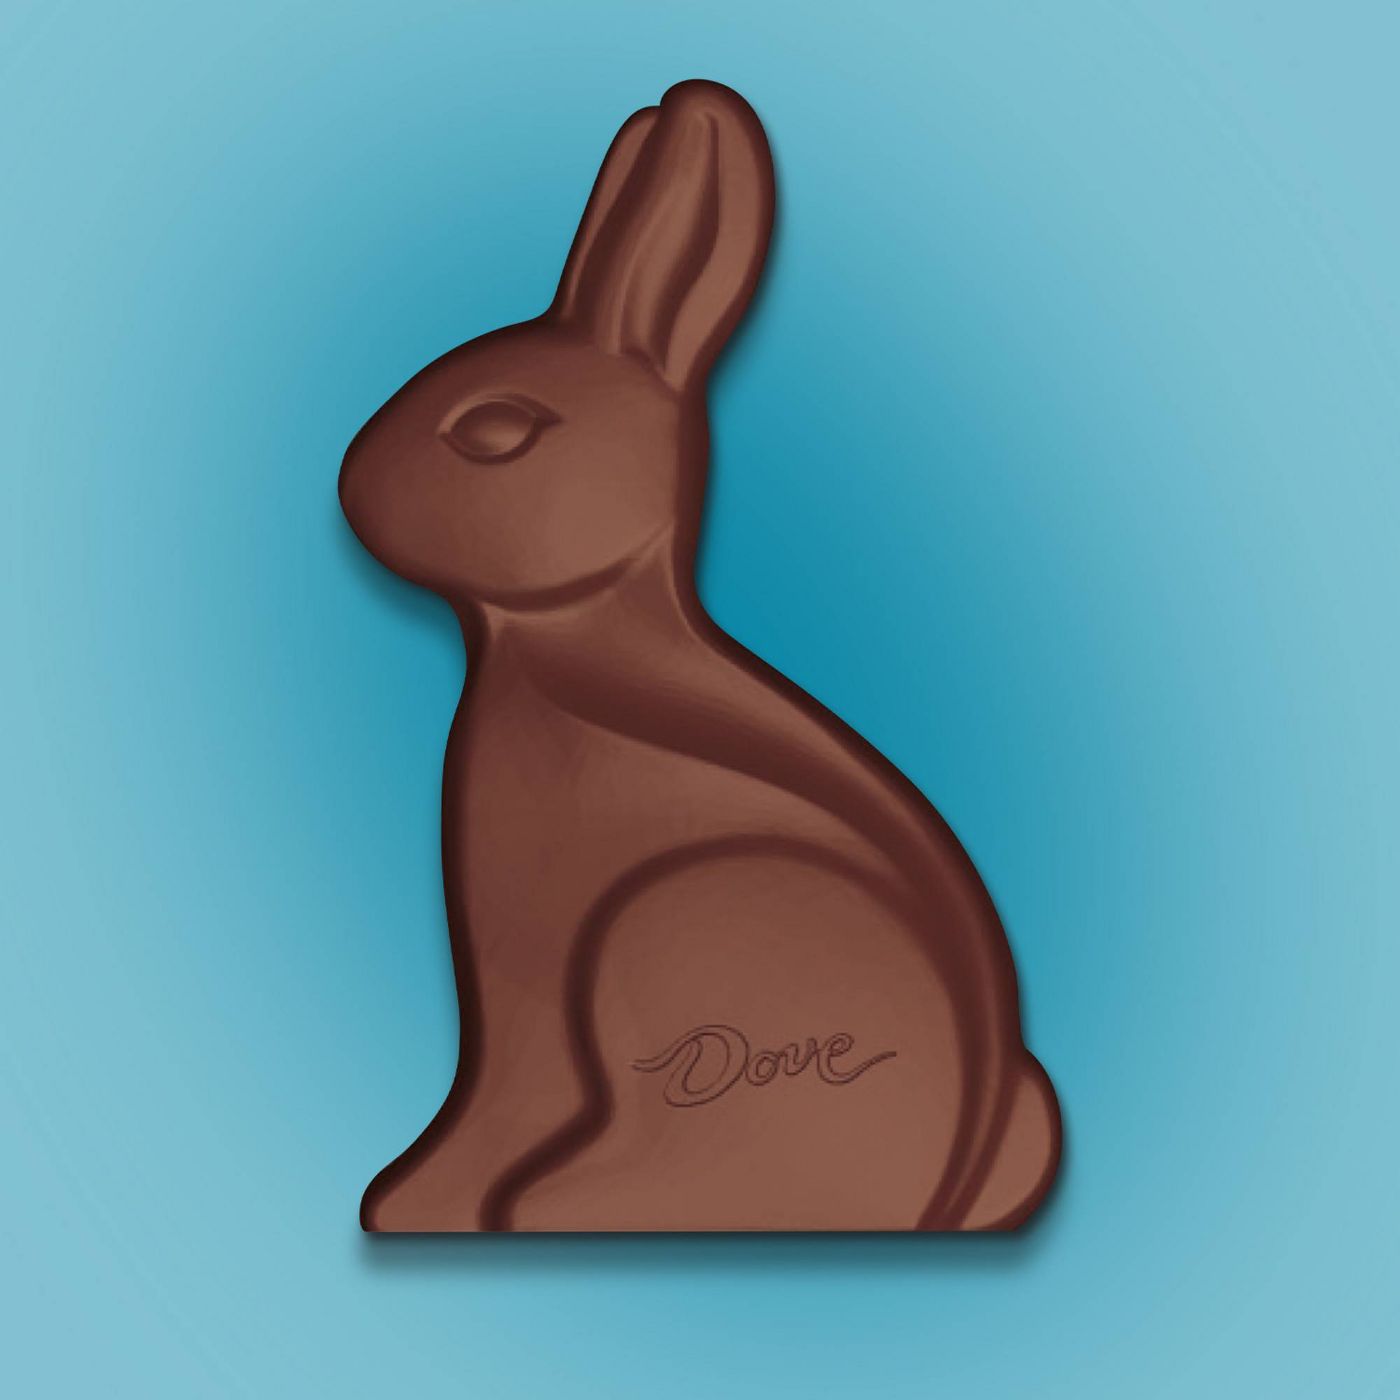 Dove Easter Milk Chocolate Bunny, 4.5oz